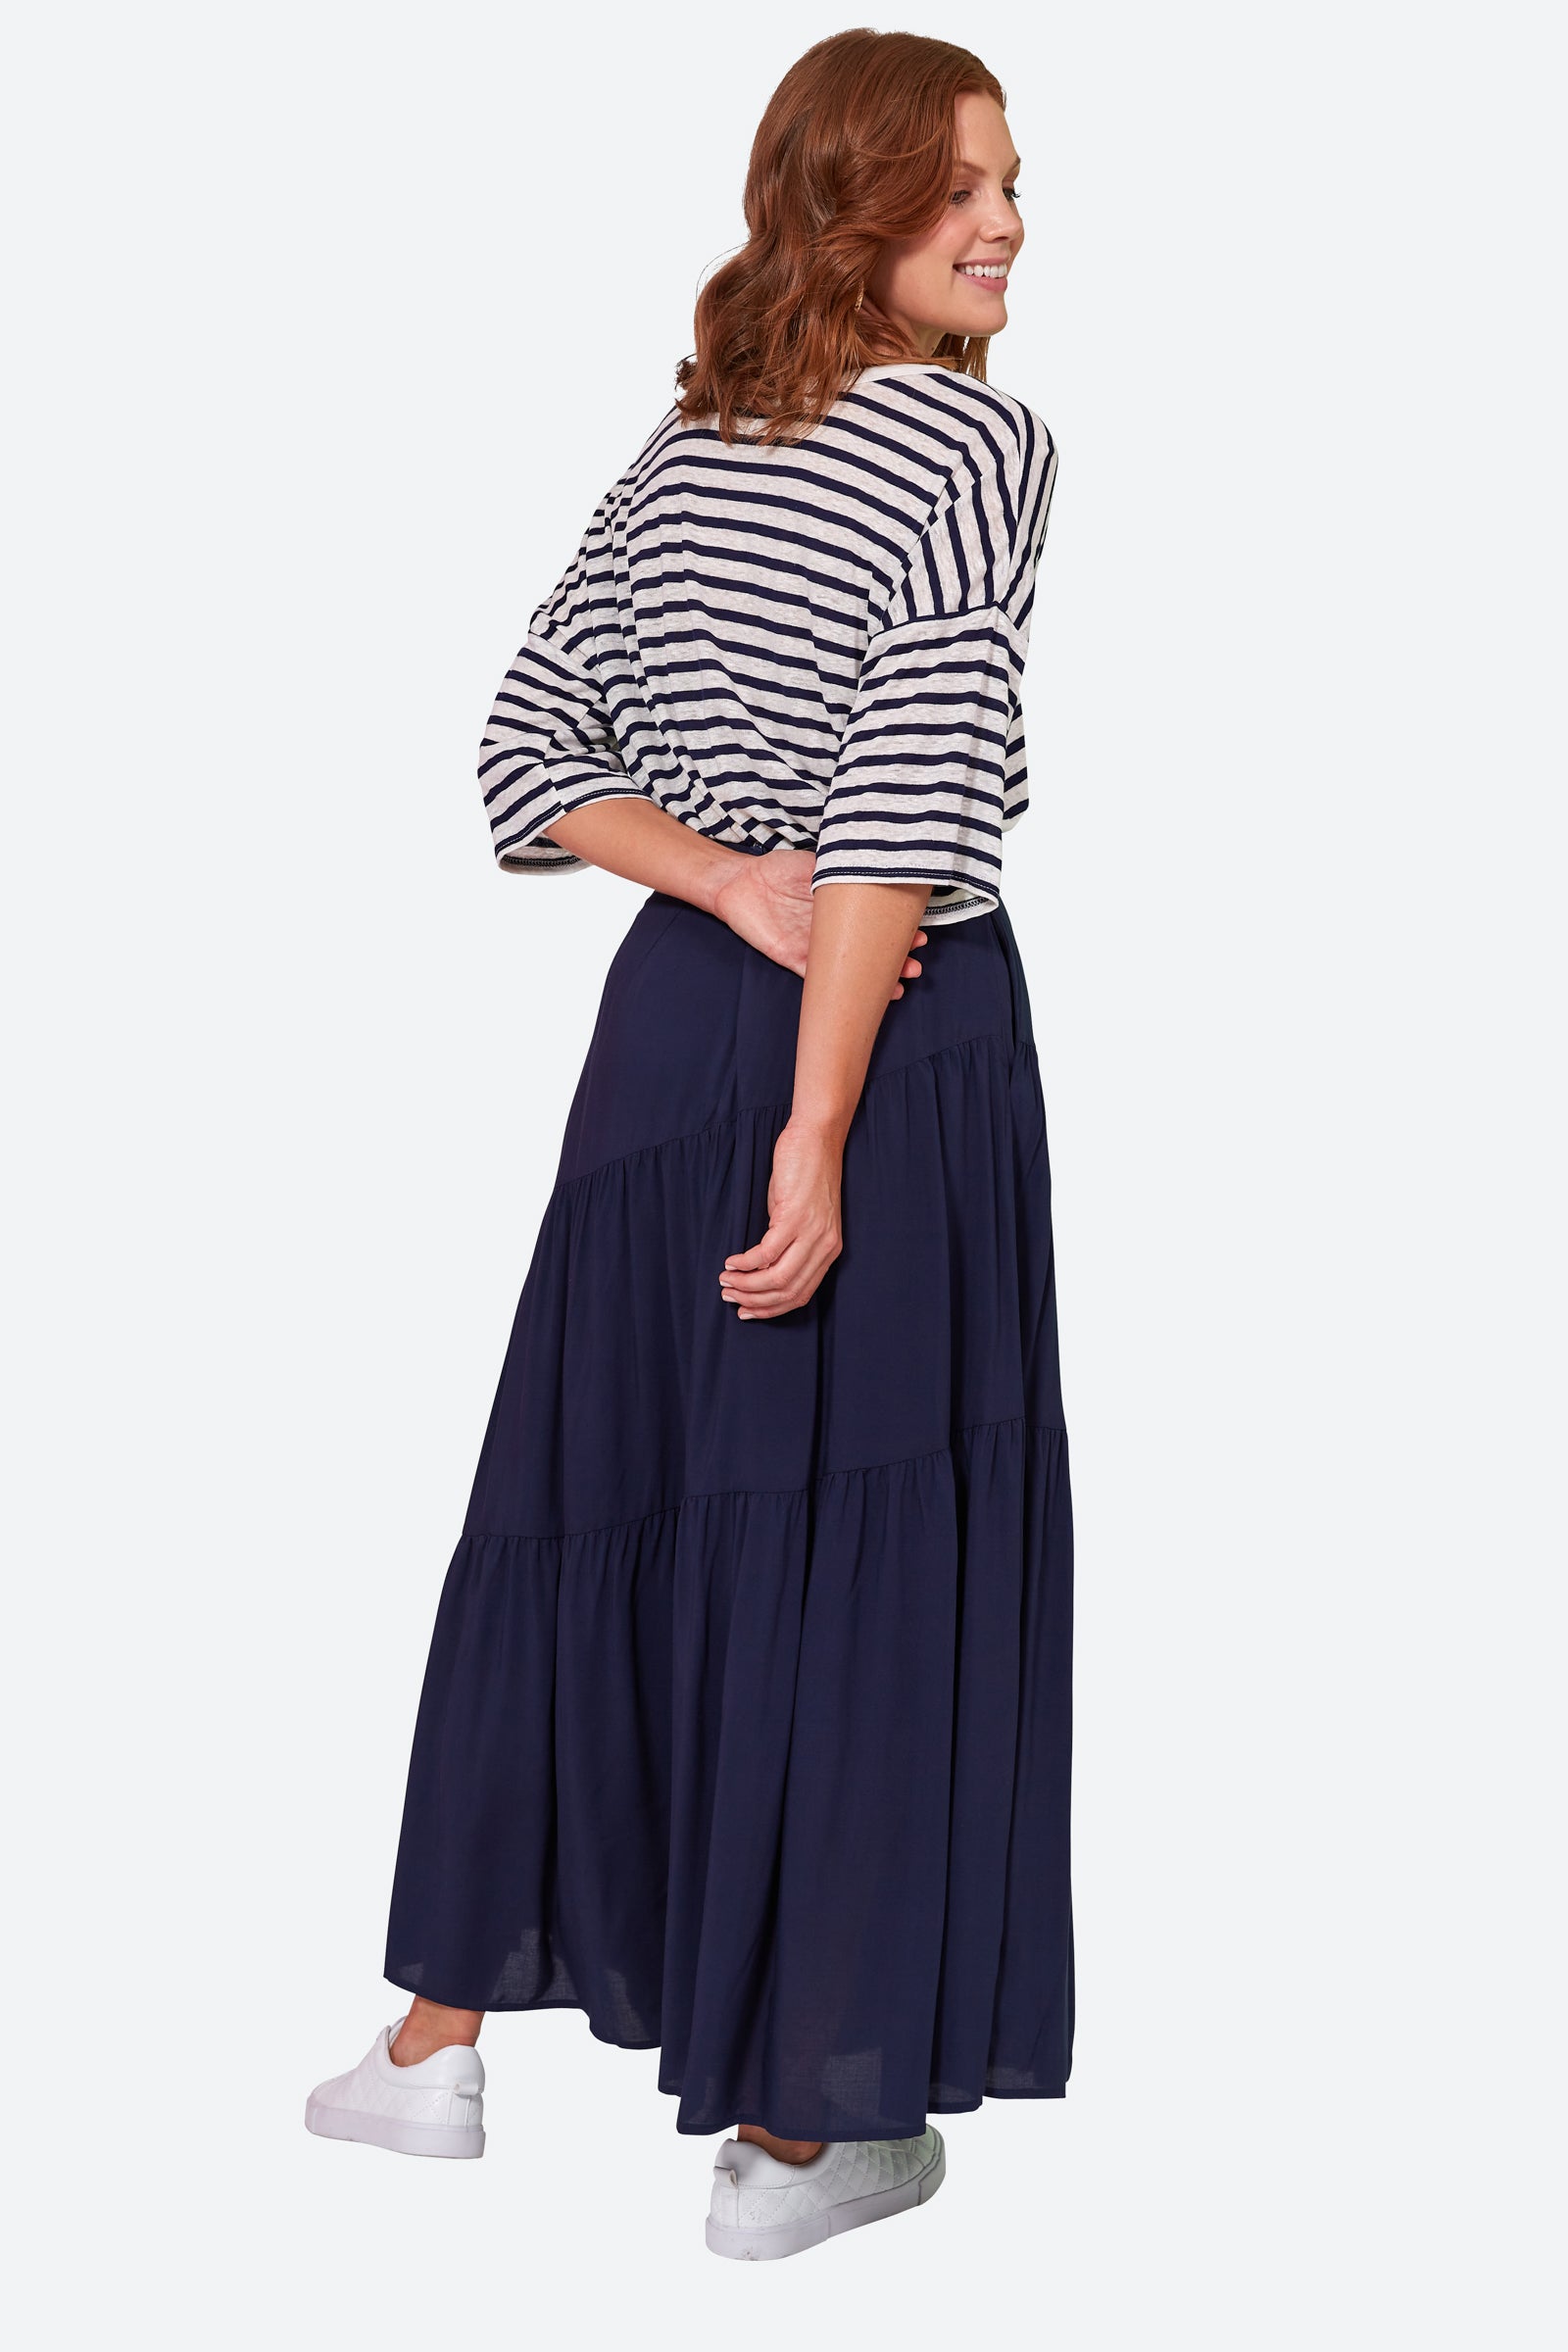 Esprit Maxi Skirt - Sapphire - eb&ive Clothing - Skirt Maxi